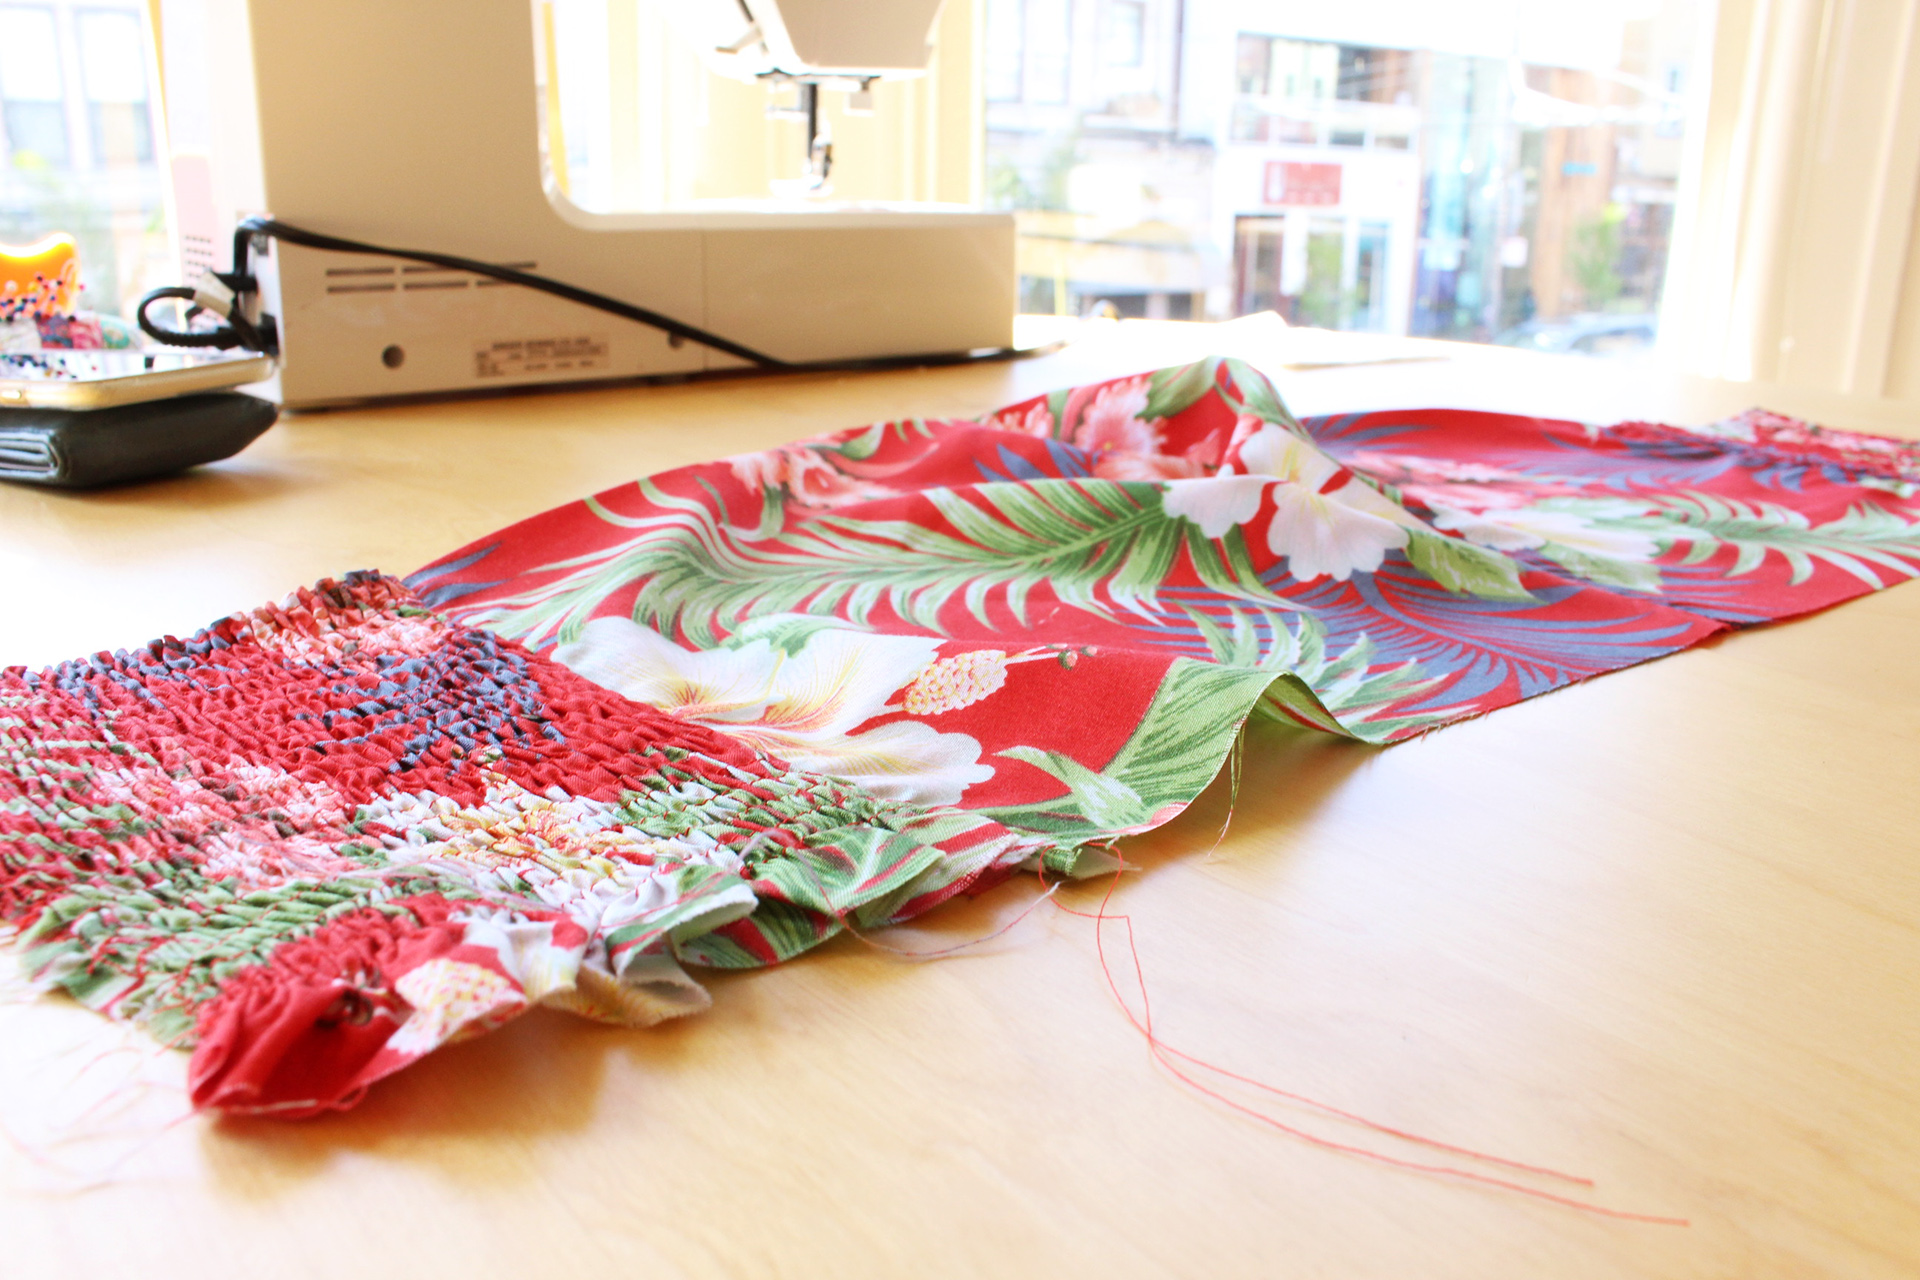 Tiki Dress, Gertie's New Book for Better Sewing, in progress bodice | @vintageontap